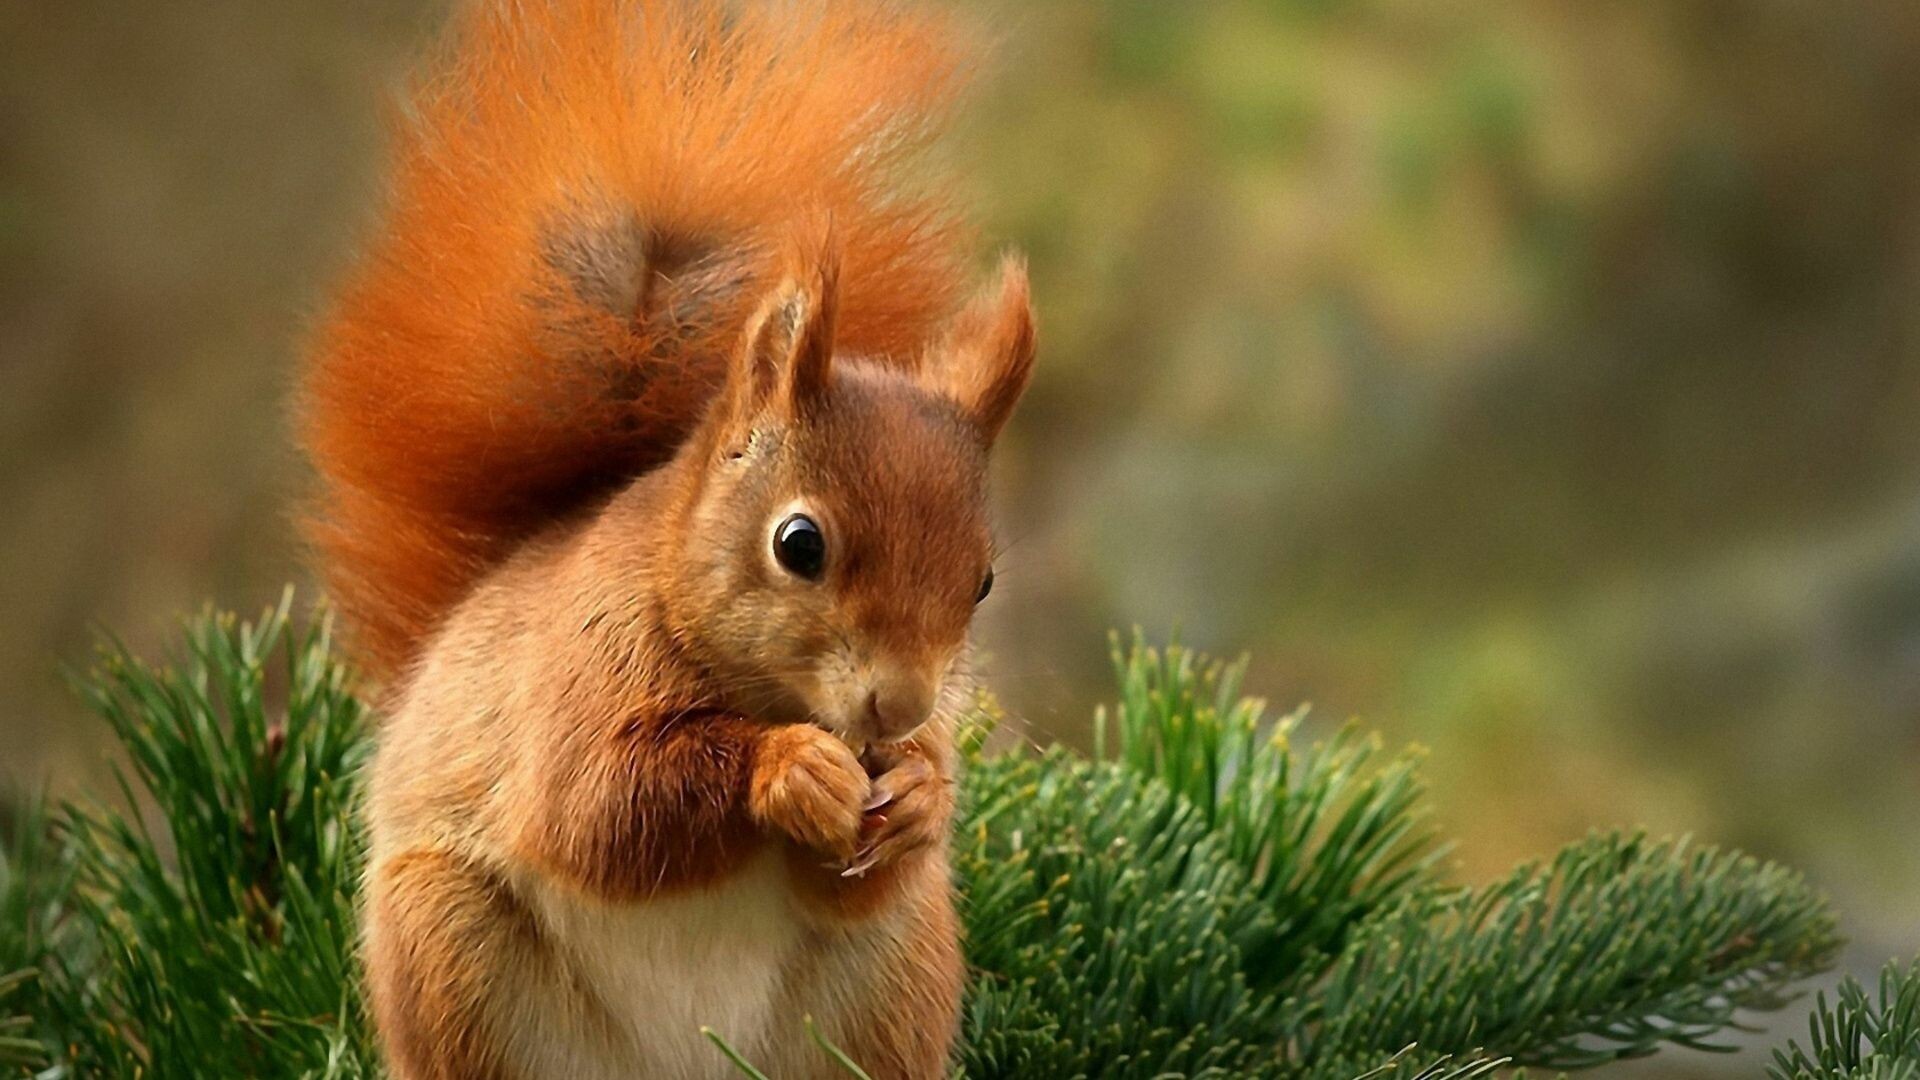 Squirrel: Mammals, distinguished by their long bushy tail. 1920x1080 Full HD Wallpaper.